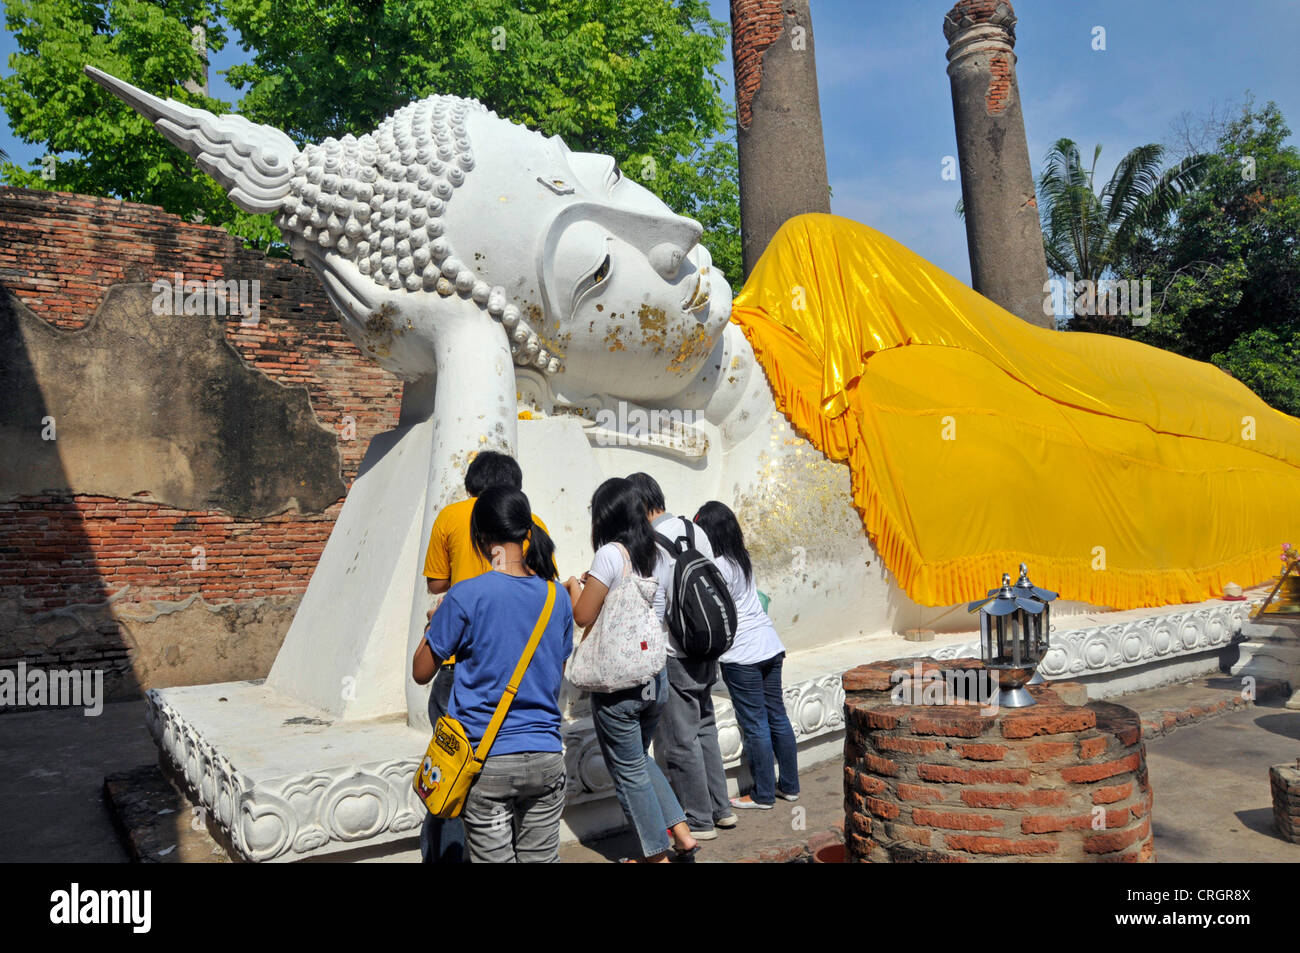 Los turistas tomando fotos de la mentada buda de oro con túnica, cambiar al Nirvana, Tailandia, Ayutthaya, Wat Yai Chai Mongkon, Wihan Phraphutthasaiyat Foto de stock